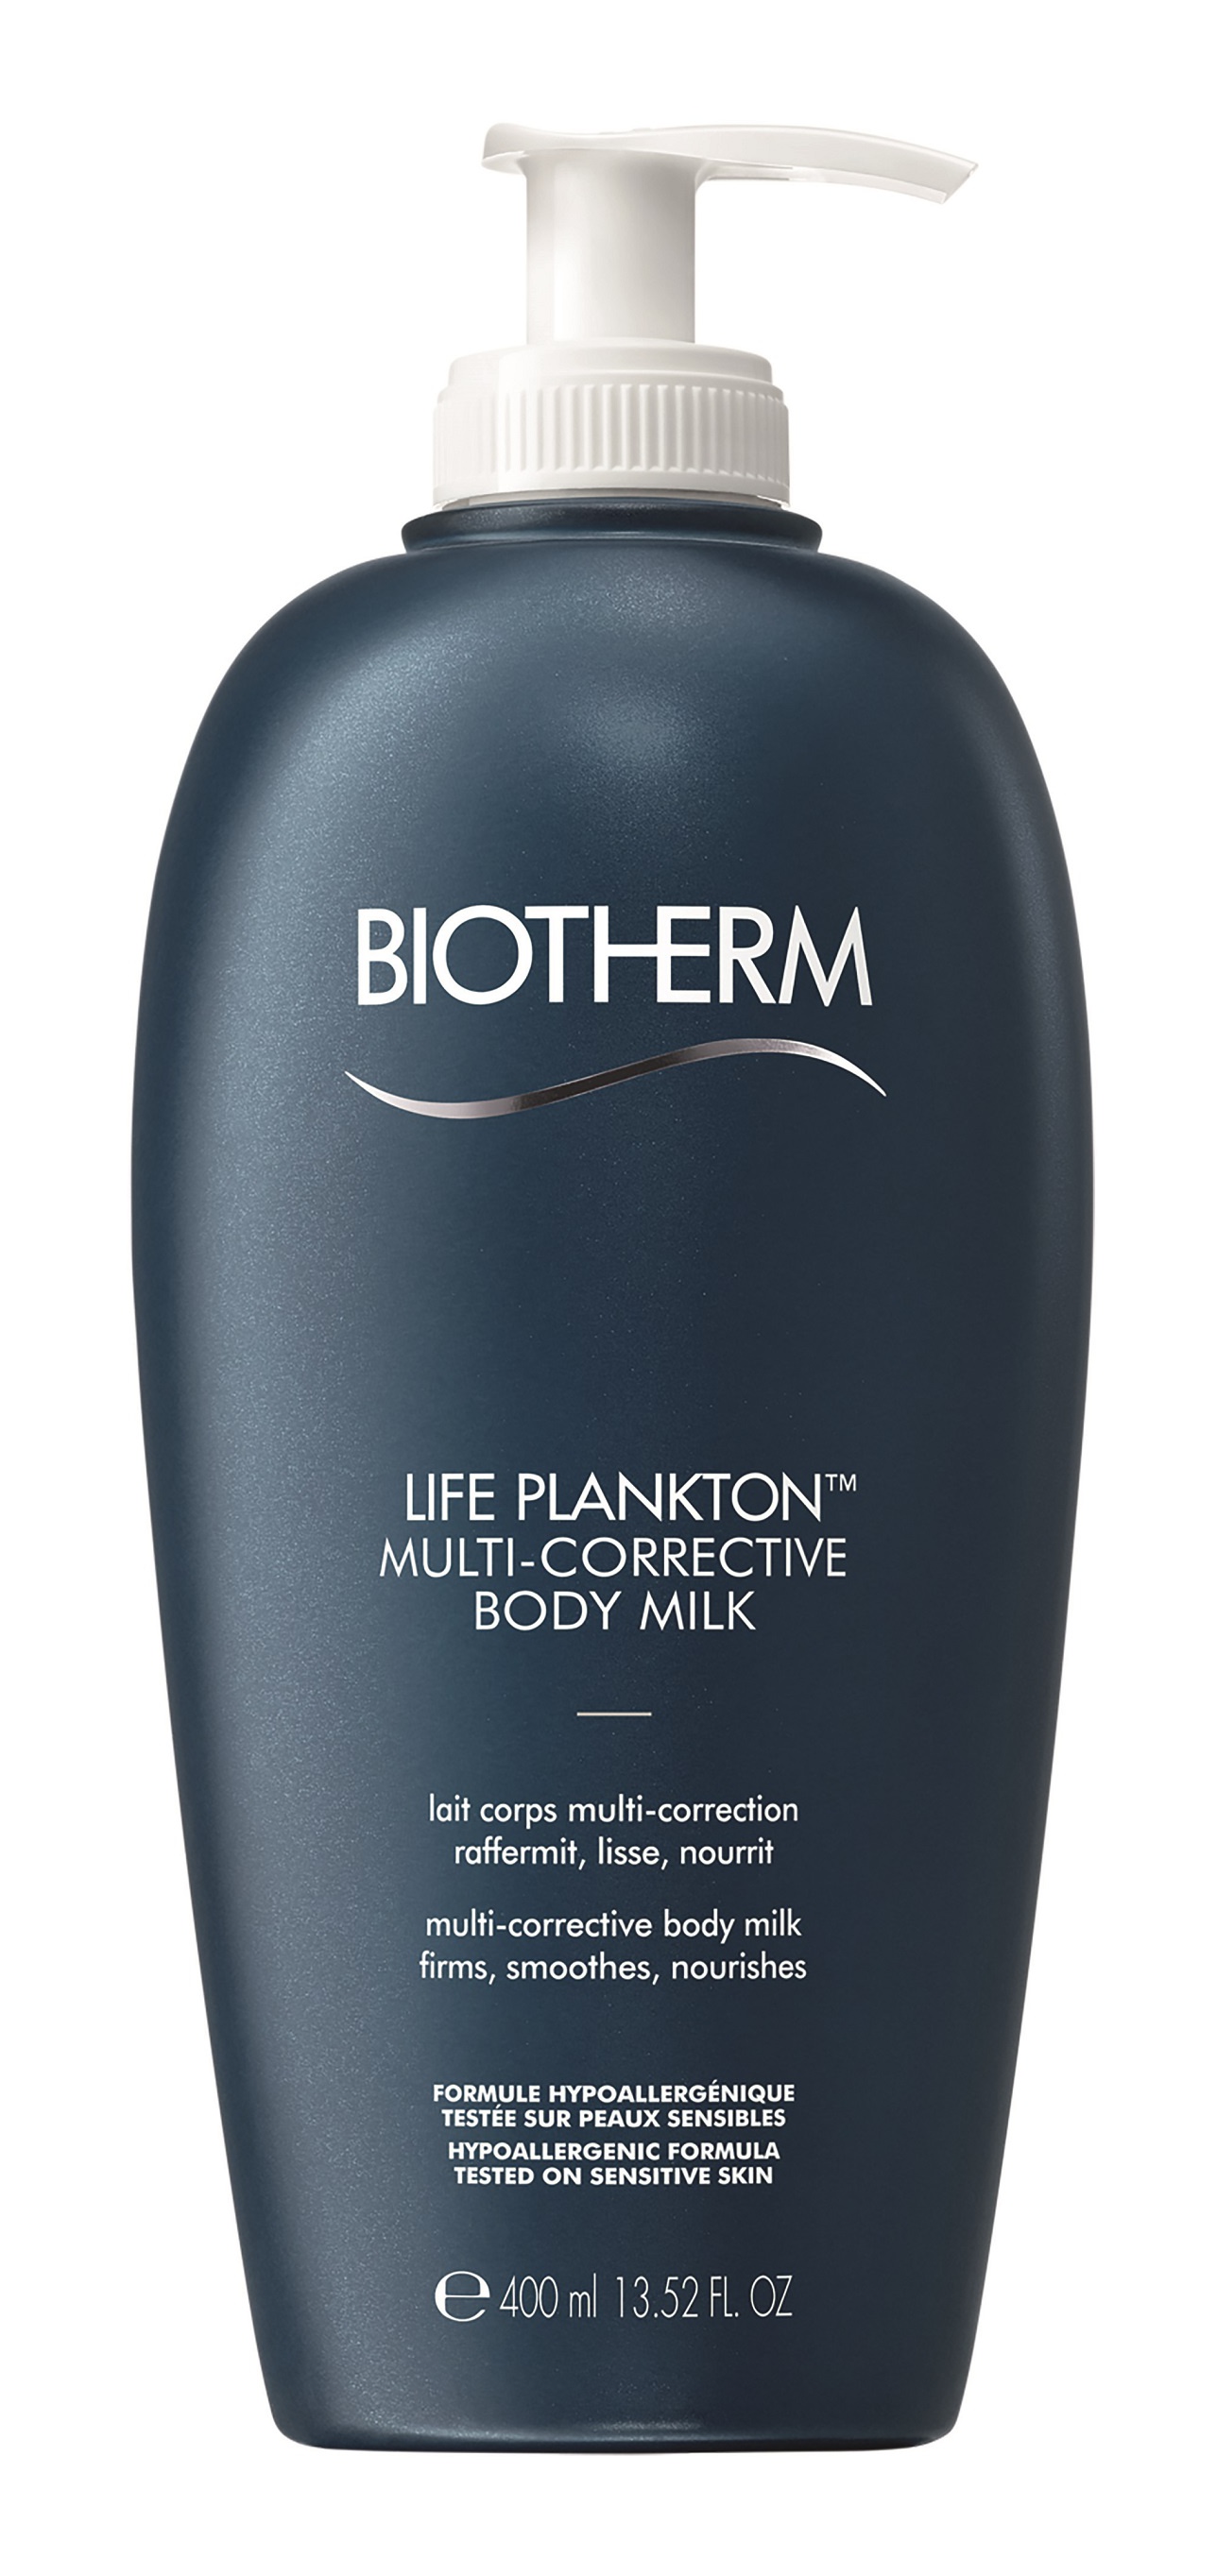 Biotherm Life Plankton™ Multi-Corrective Body Milk